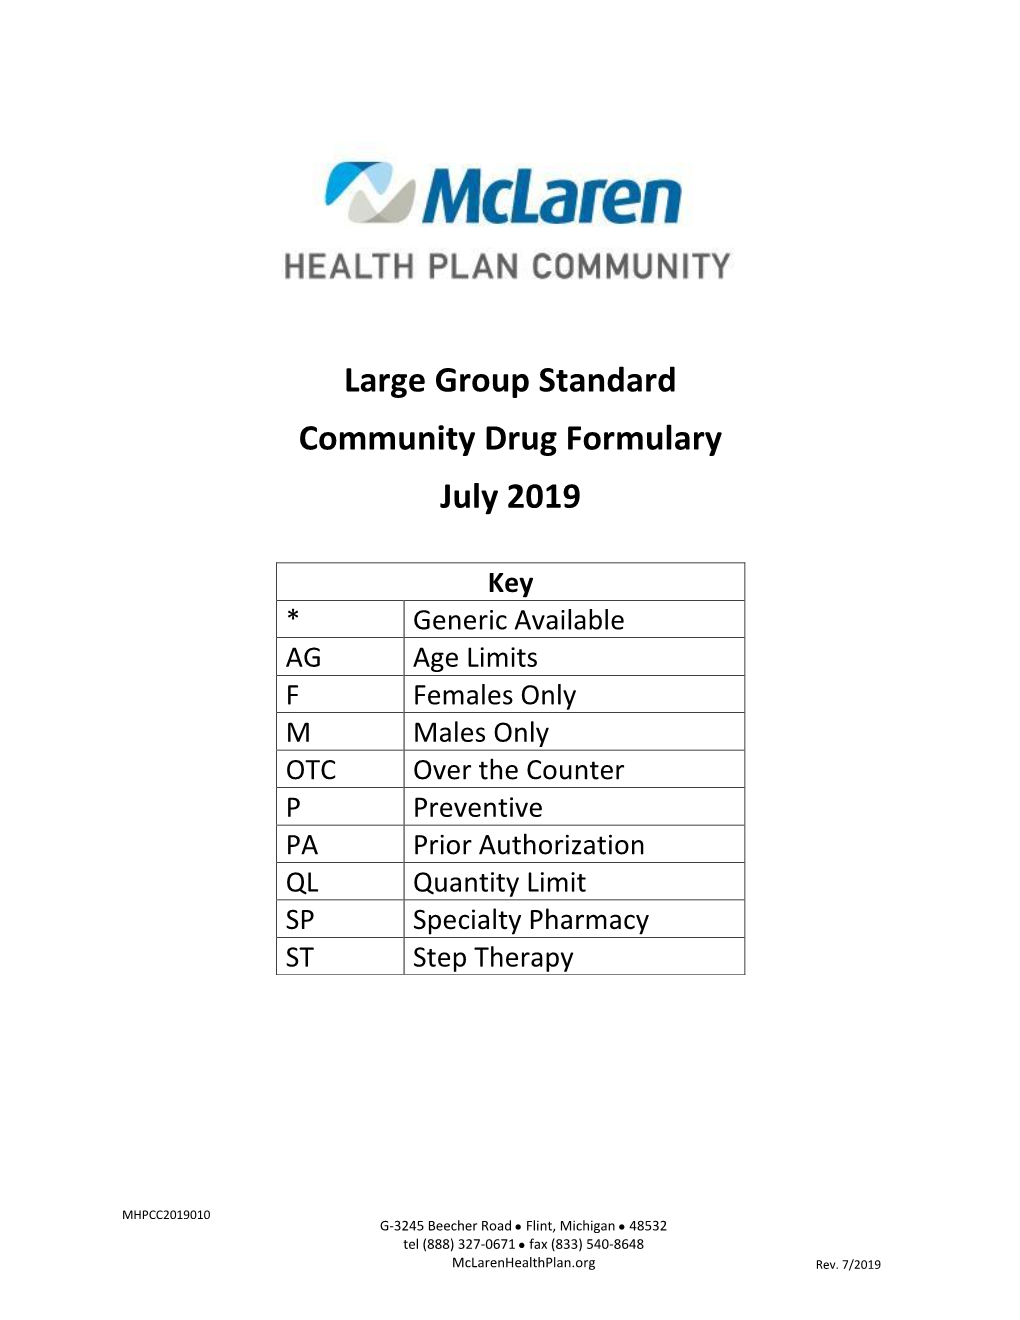 Large Group Standard Community Drug Formulary July 2019